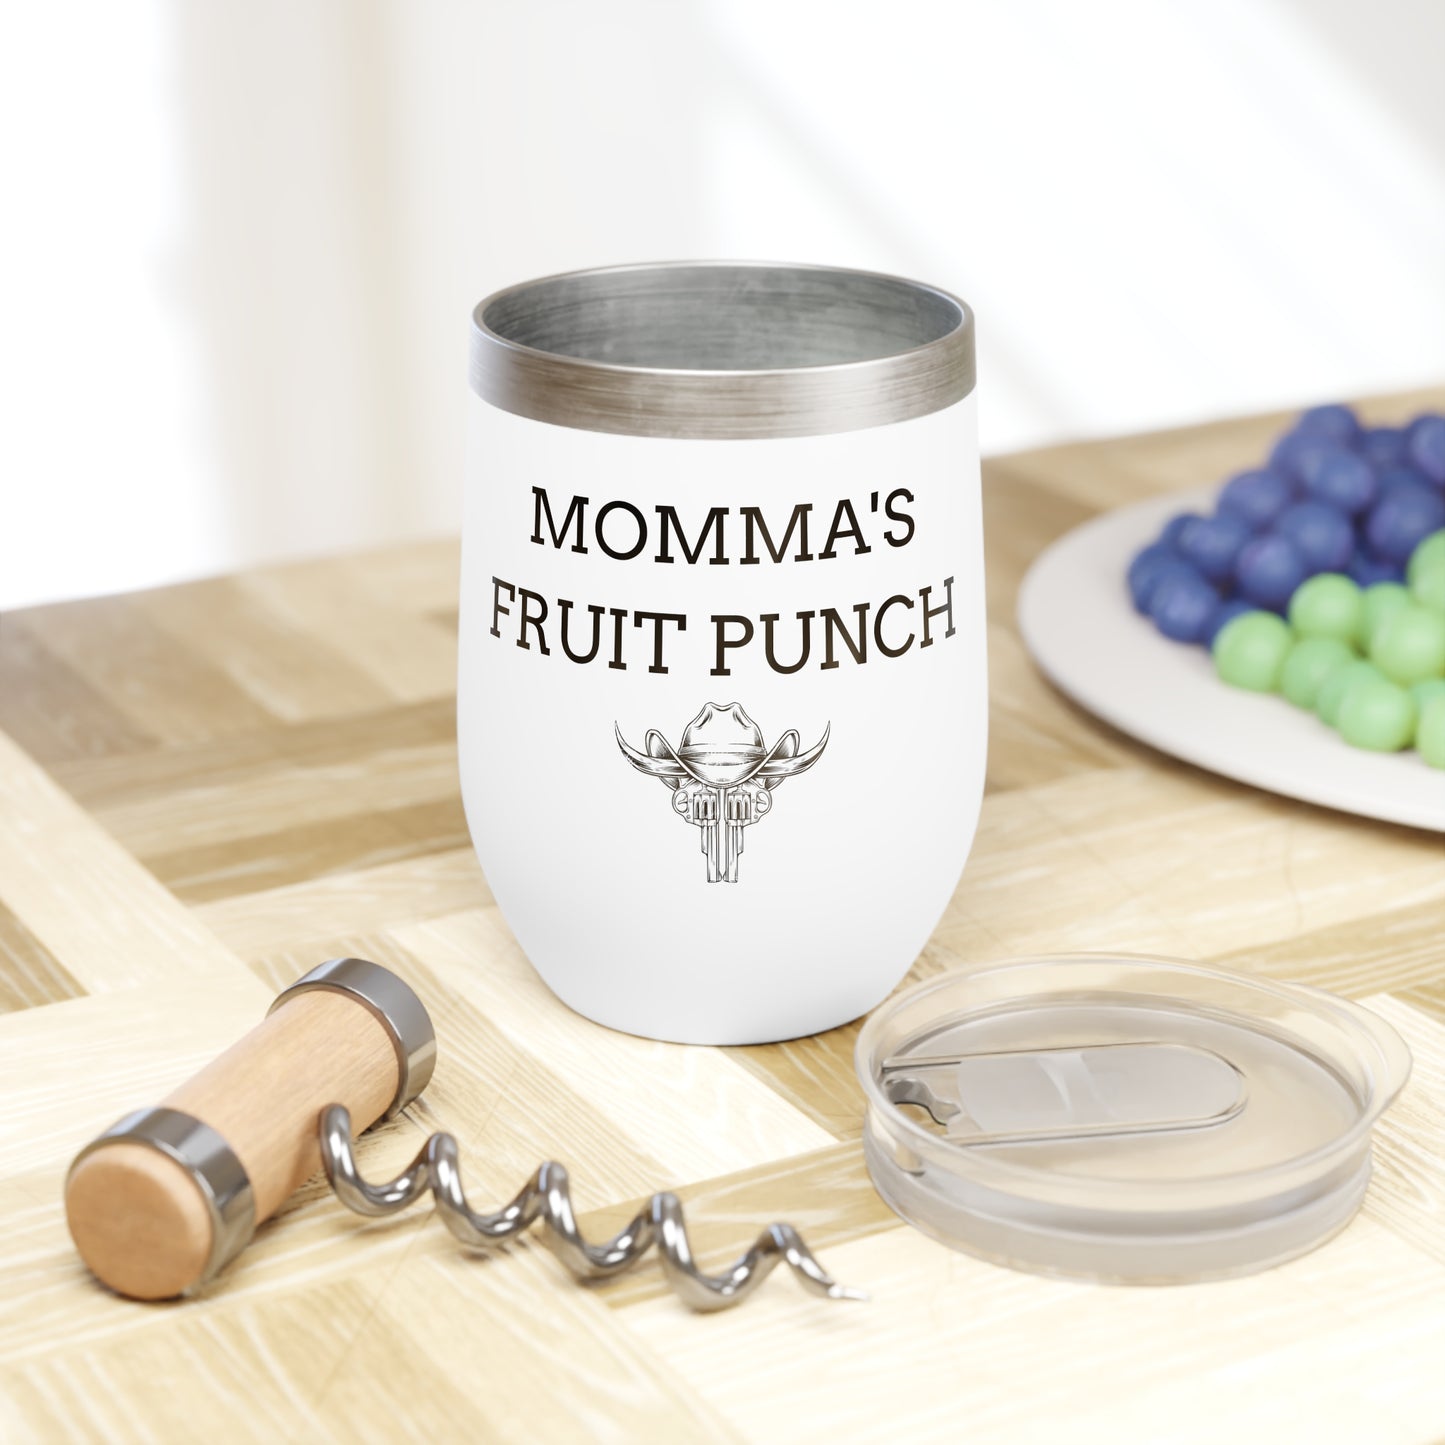 "MOMMA'S FRUIT PUNCH" Wine Tumbler